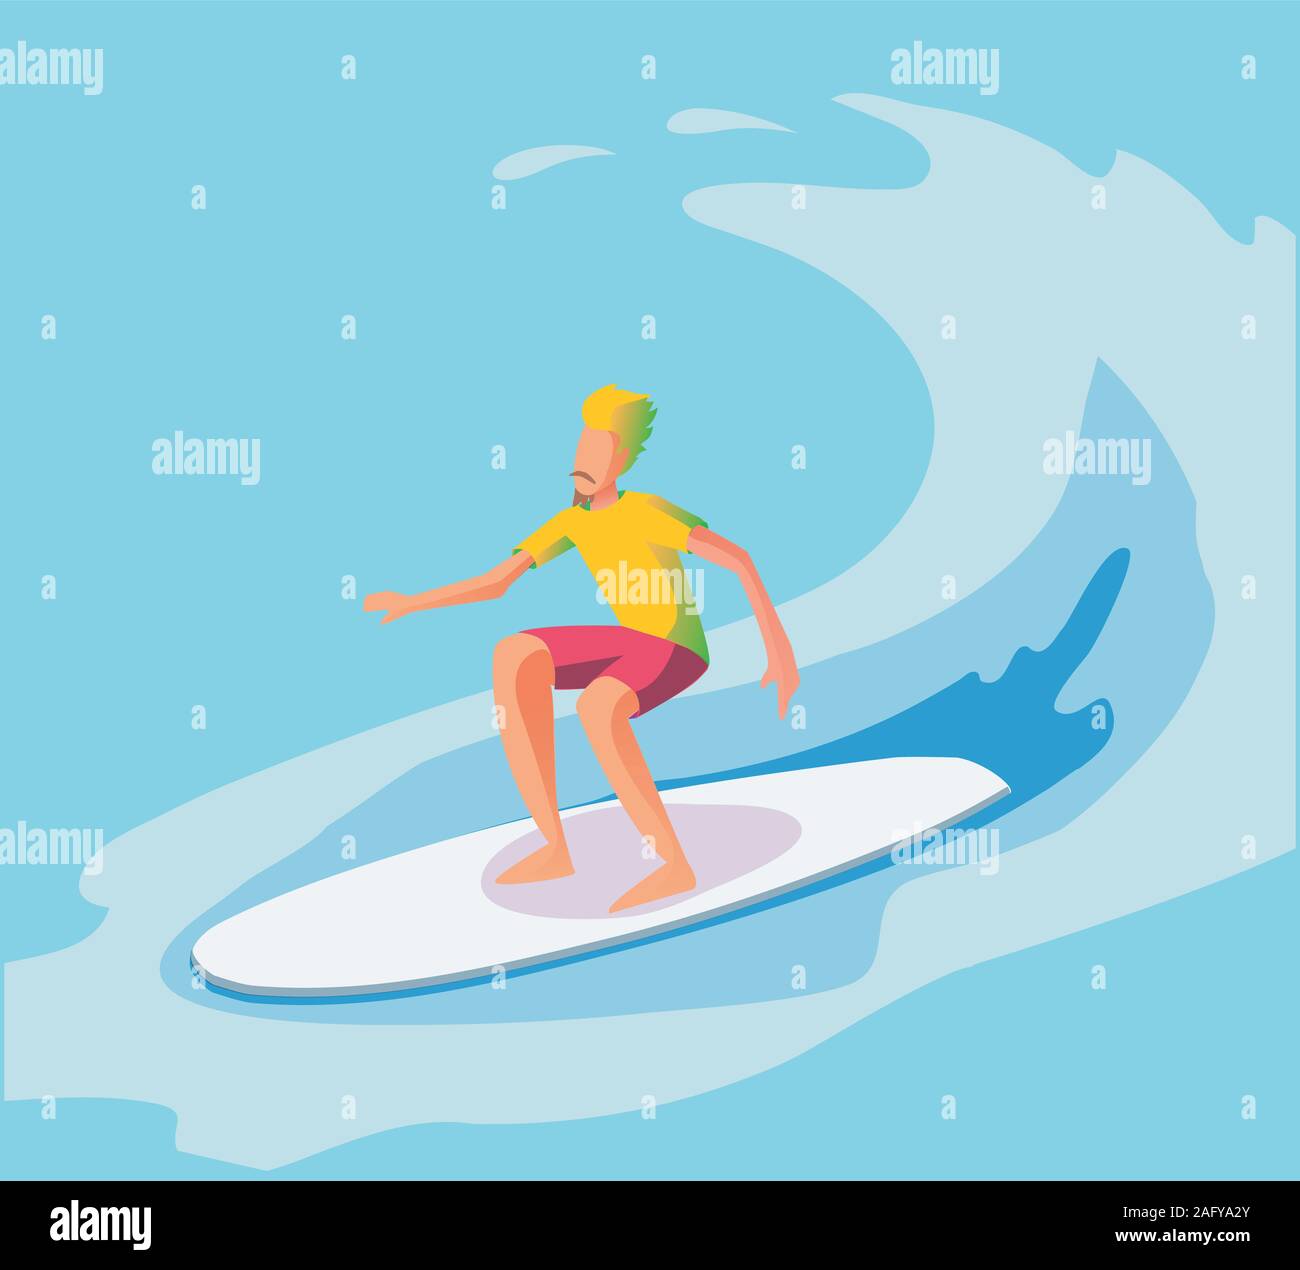 Vector illustration of surfer riding the wave. flat illustration Stock Vector